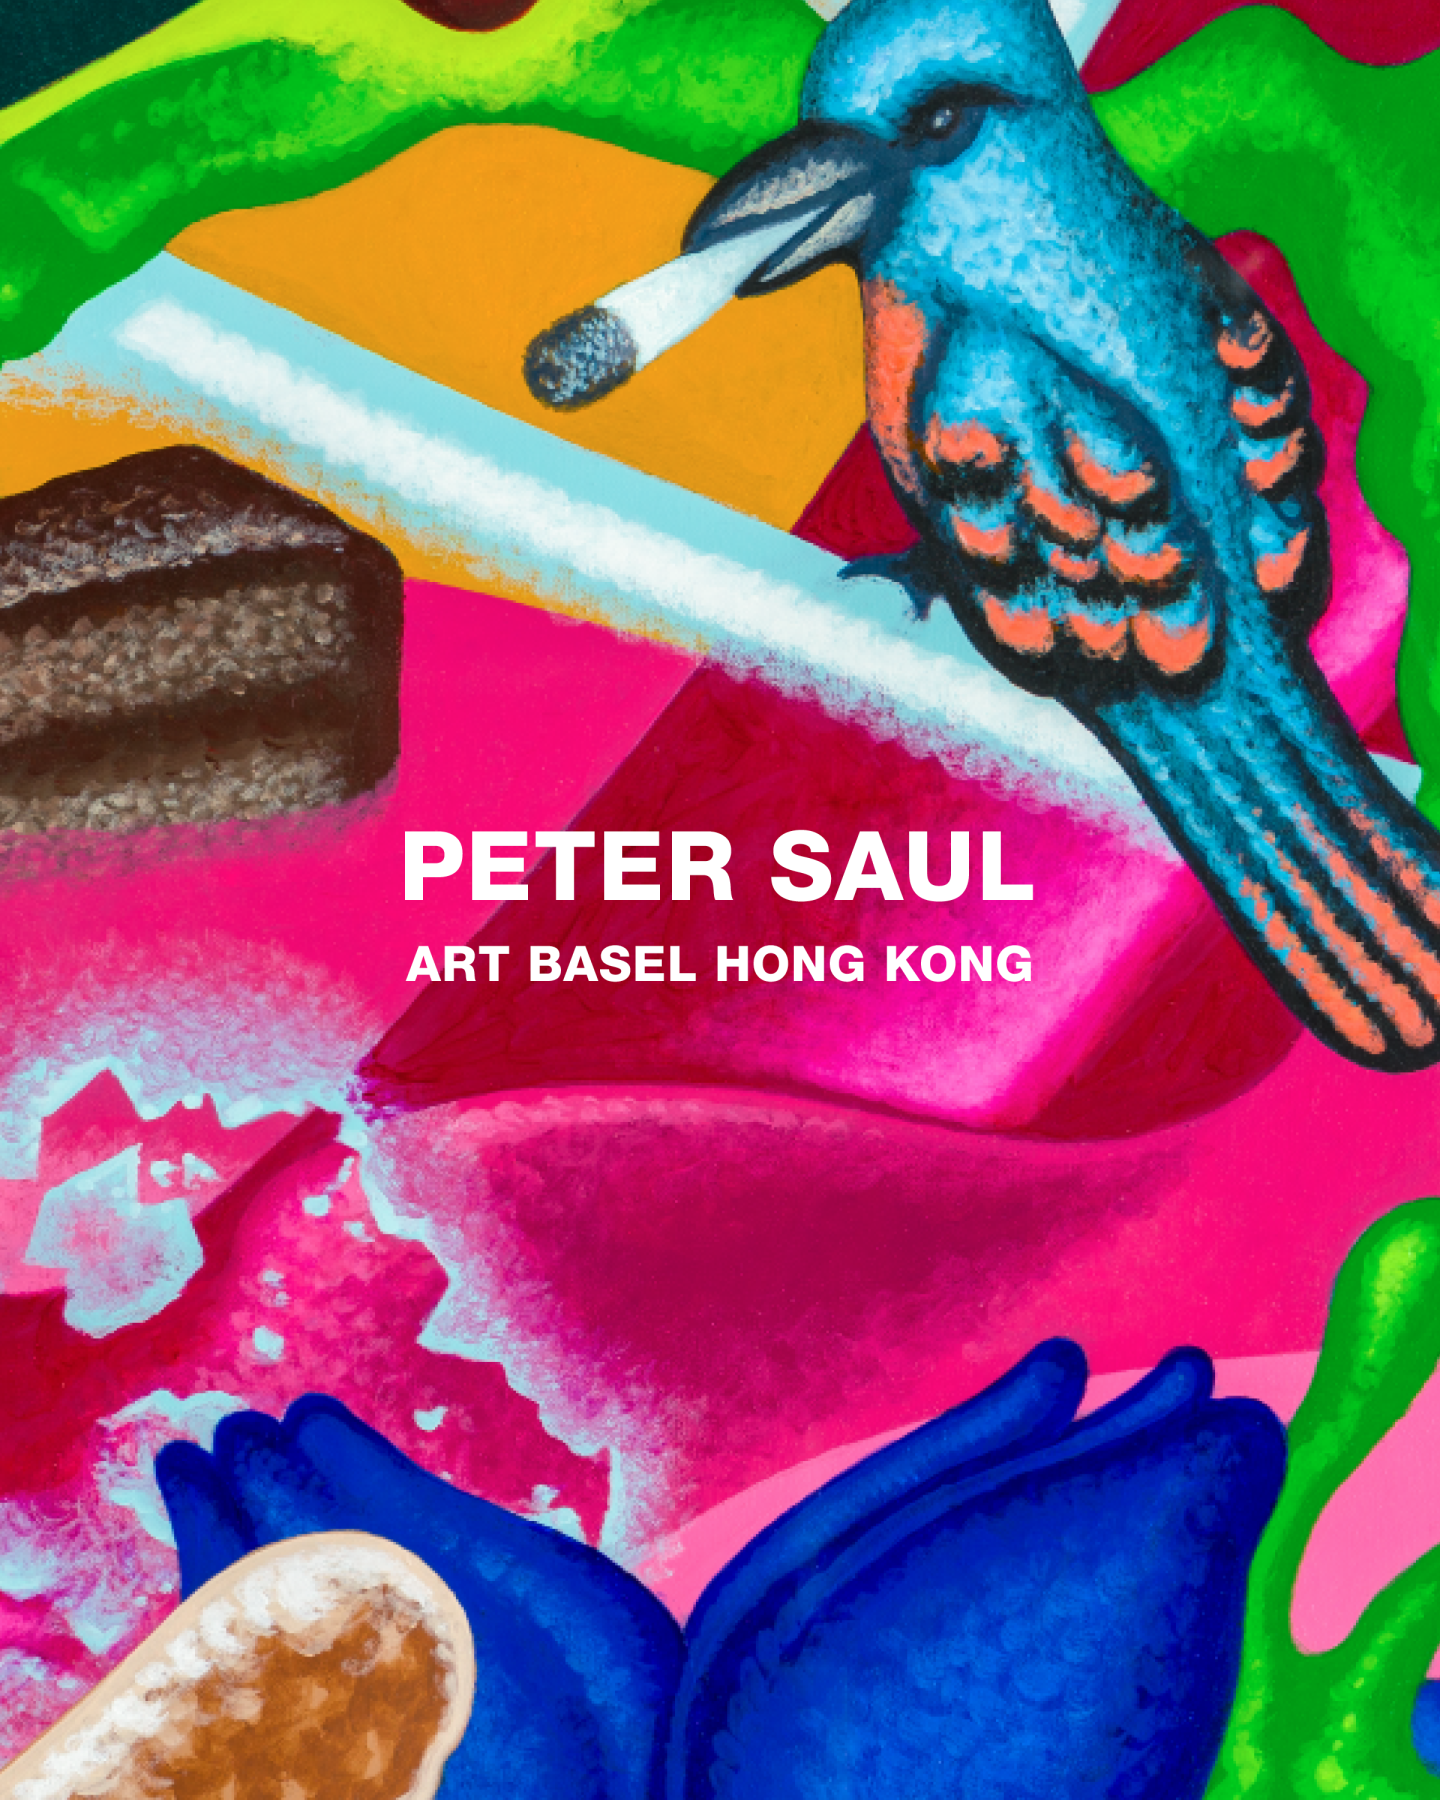 Peter Saul: Art Basel Hong Kong
March 21 - 25, 2023
Hong Kong Convention &amp;amp; Exhibition Center | Booth 3D15

Image Link